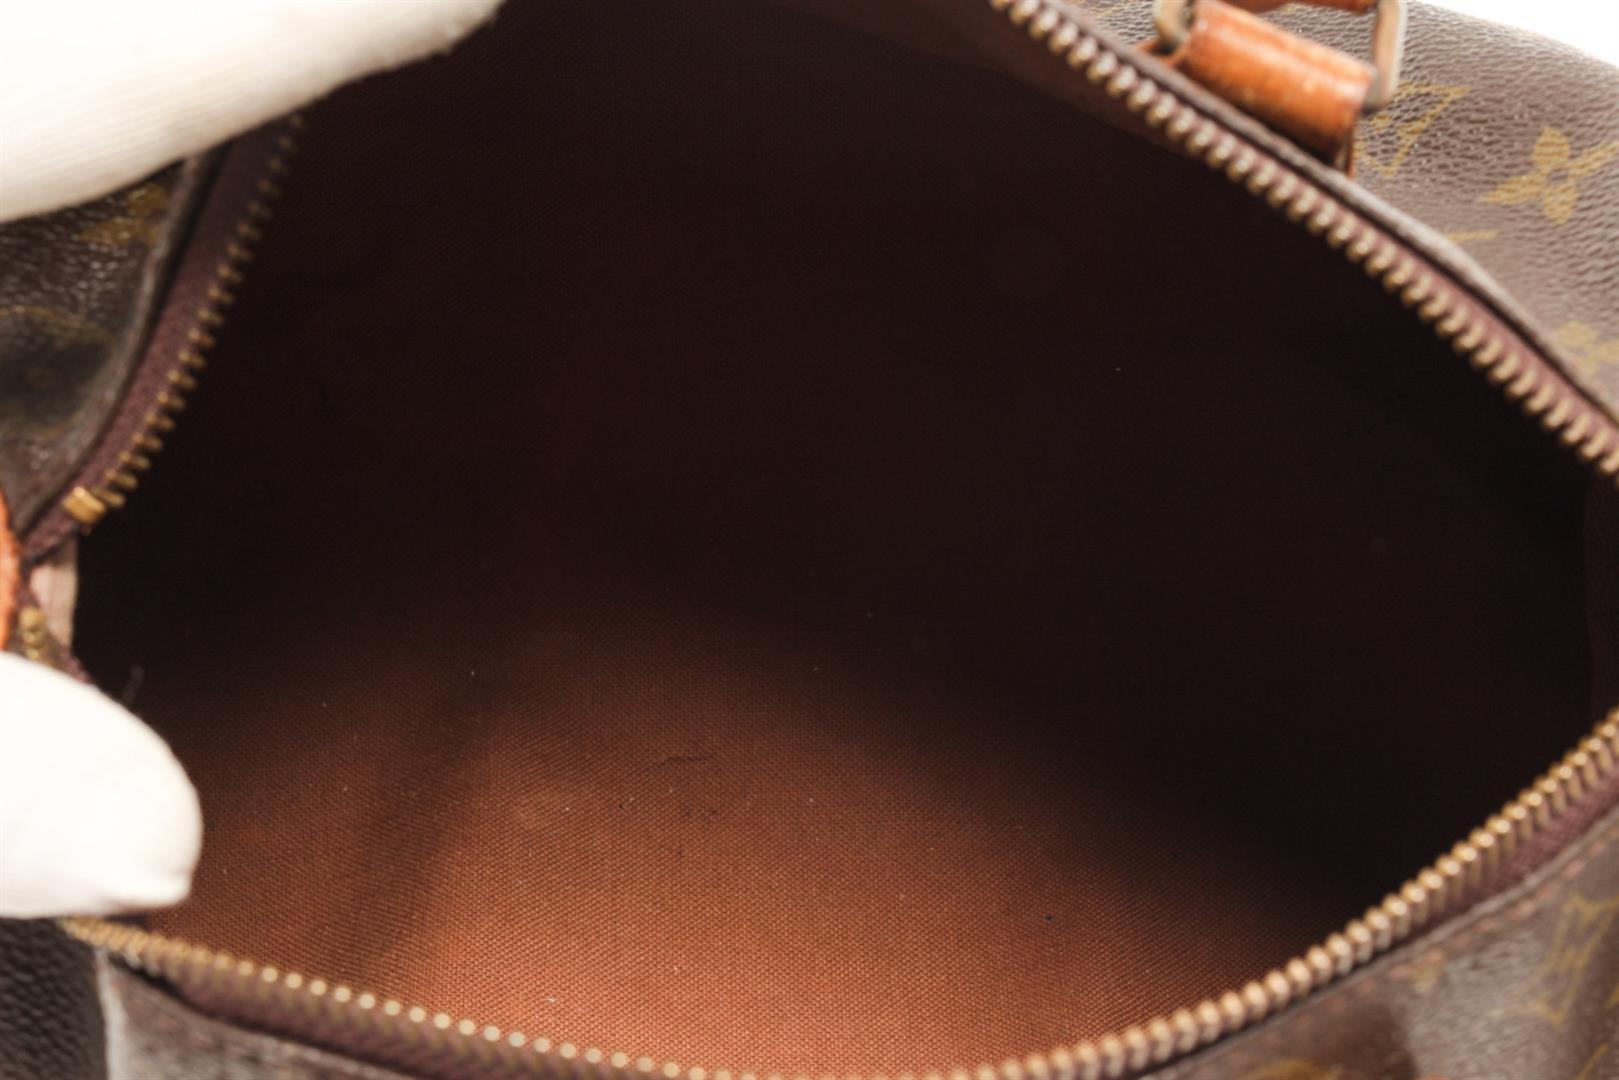 Louis Vuitton Brown Monogram Speedy 25 Handbag